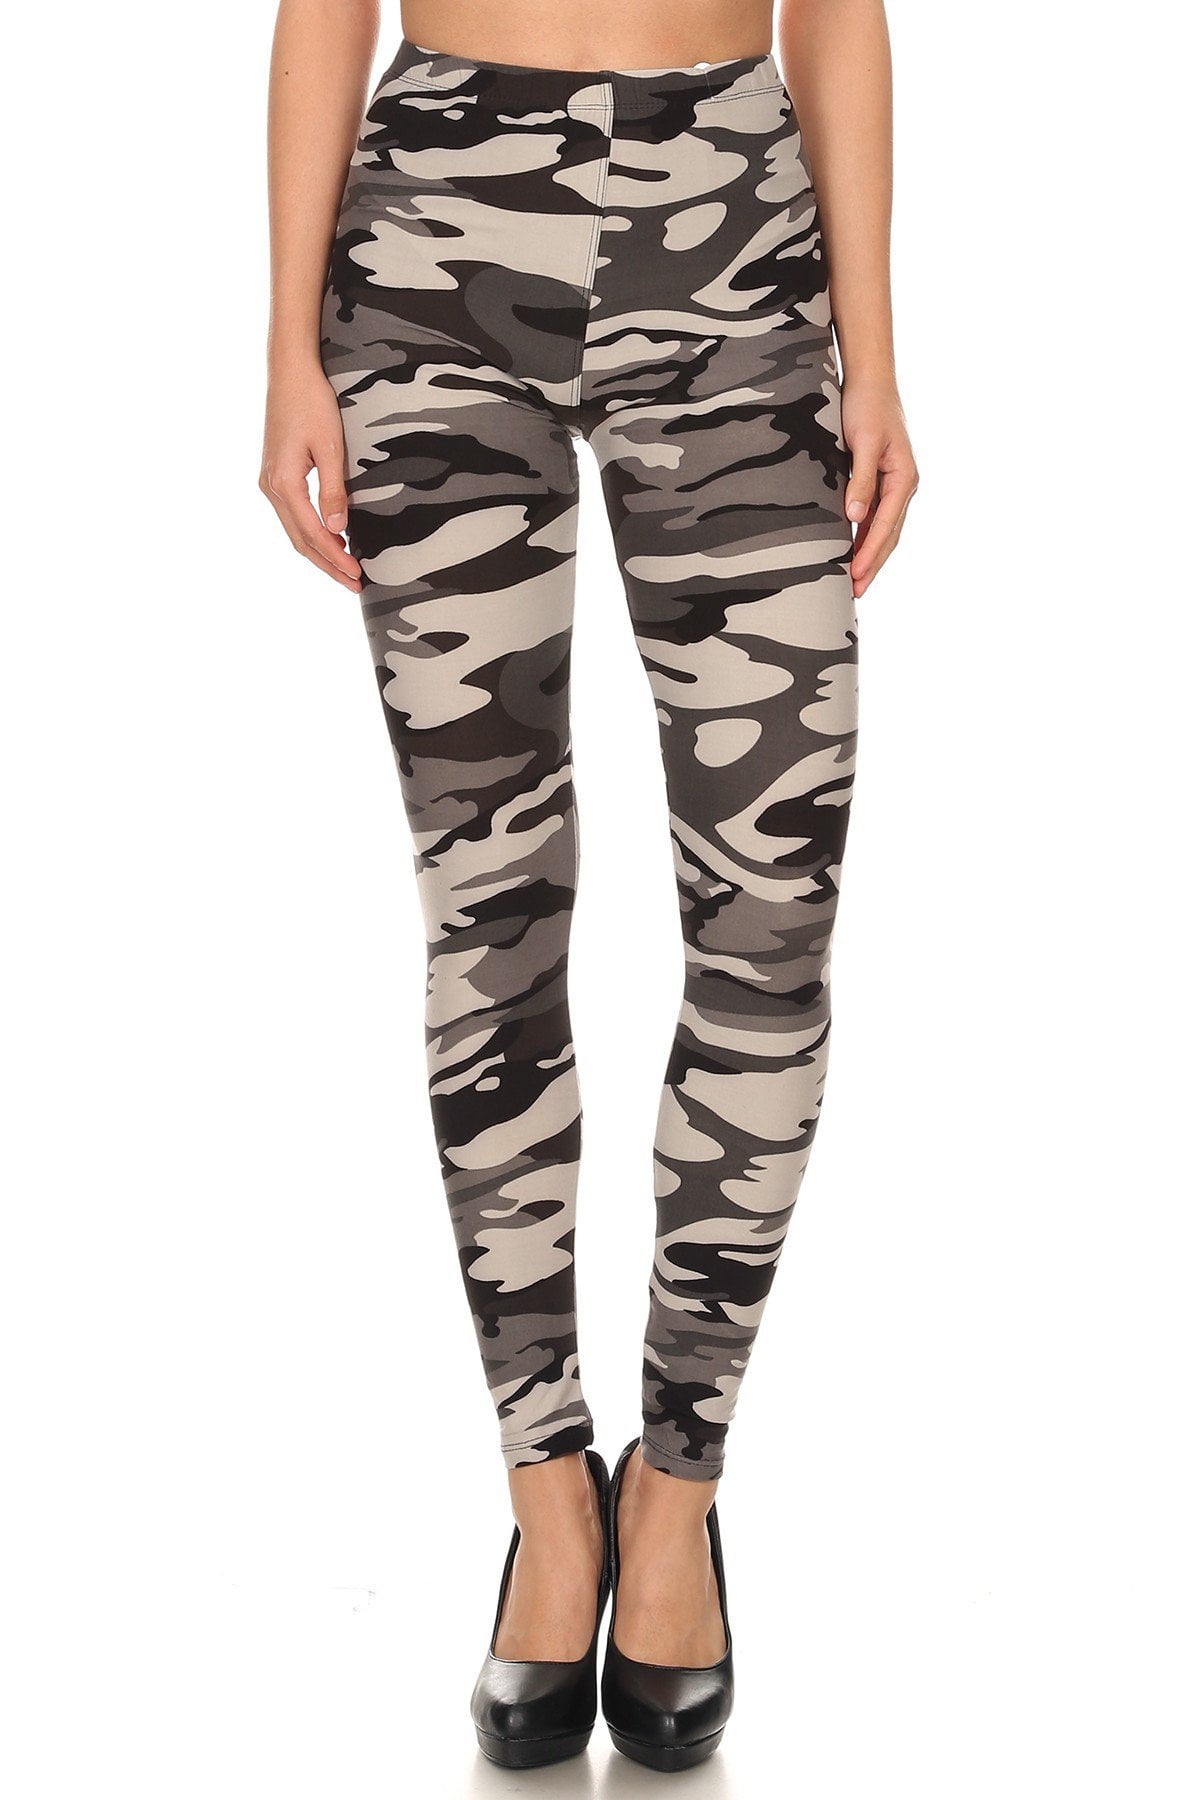 Women's 3X 5X Grey Camouflage Military Look Pattern Print Leggings ...